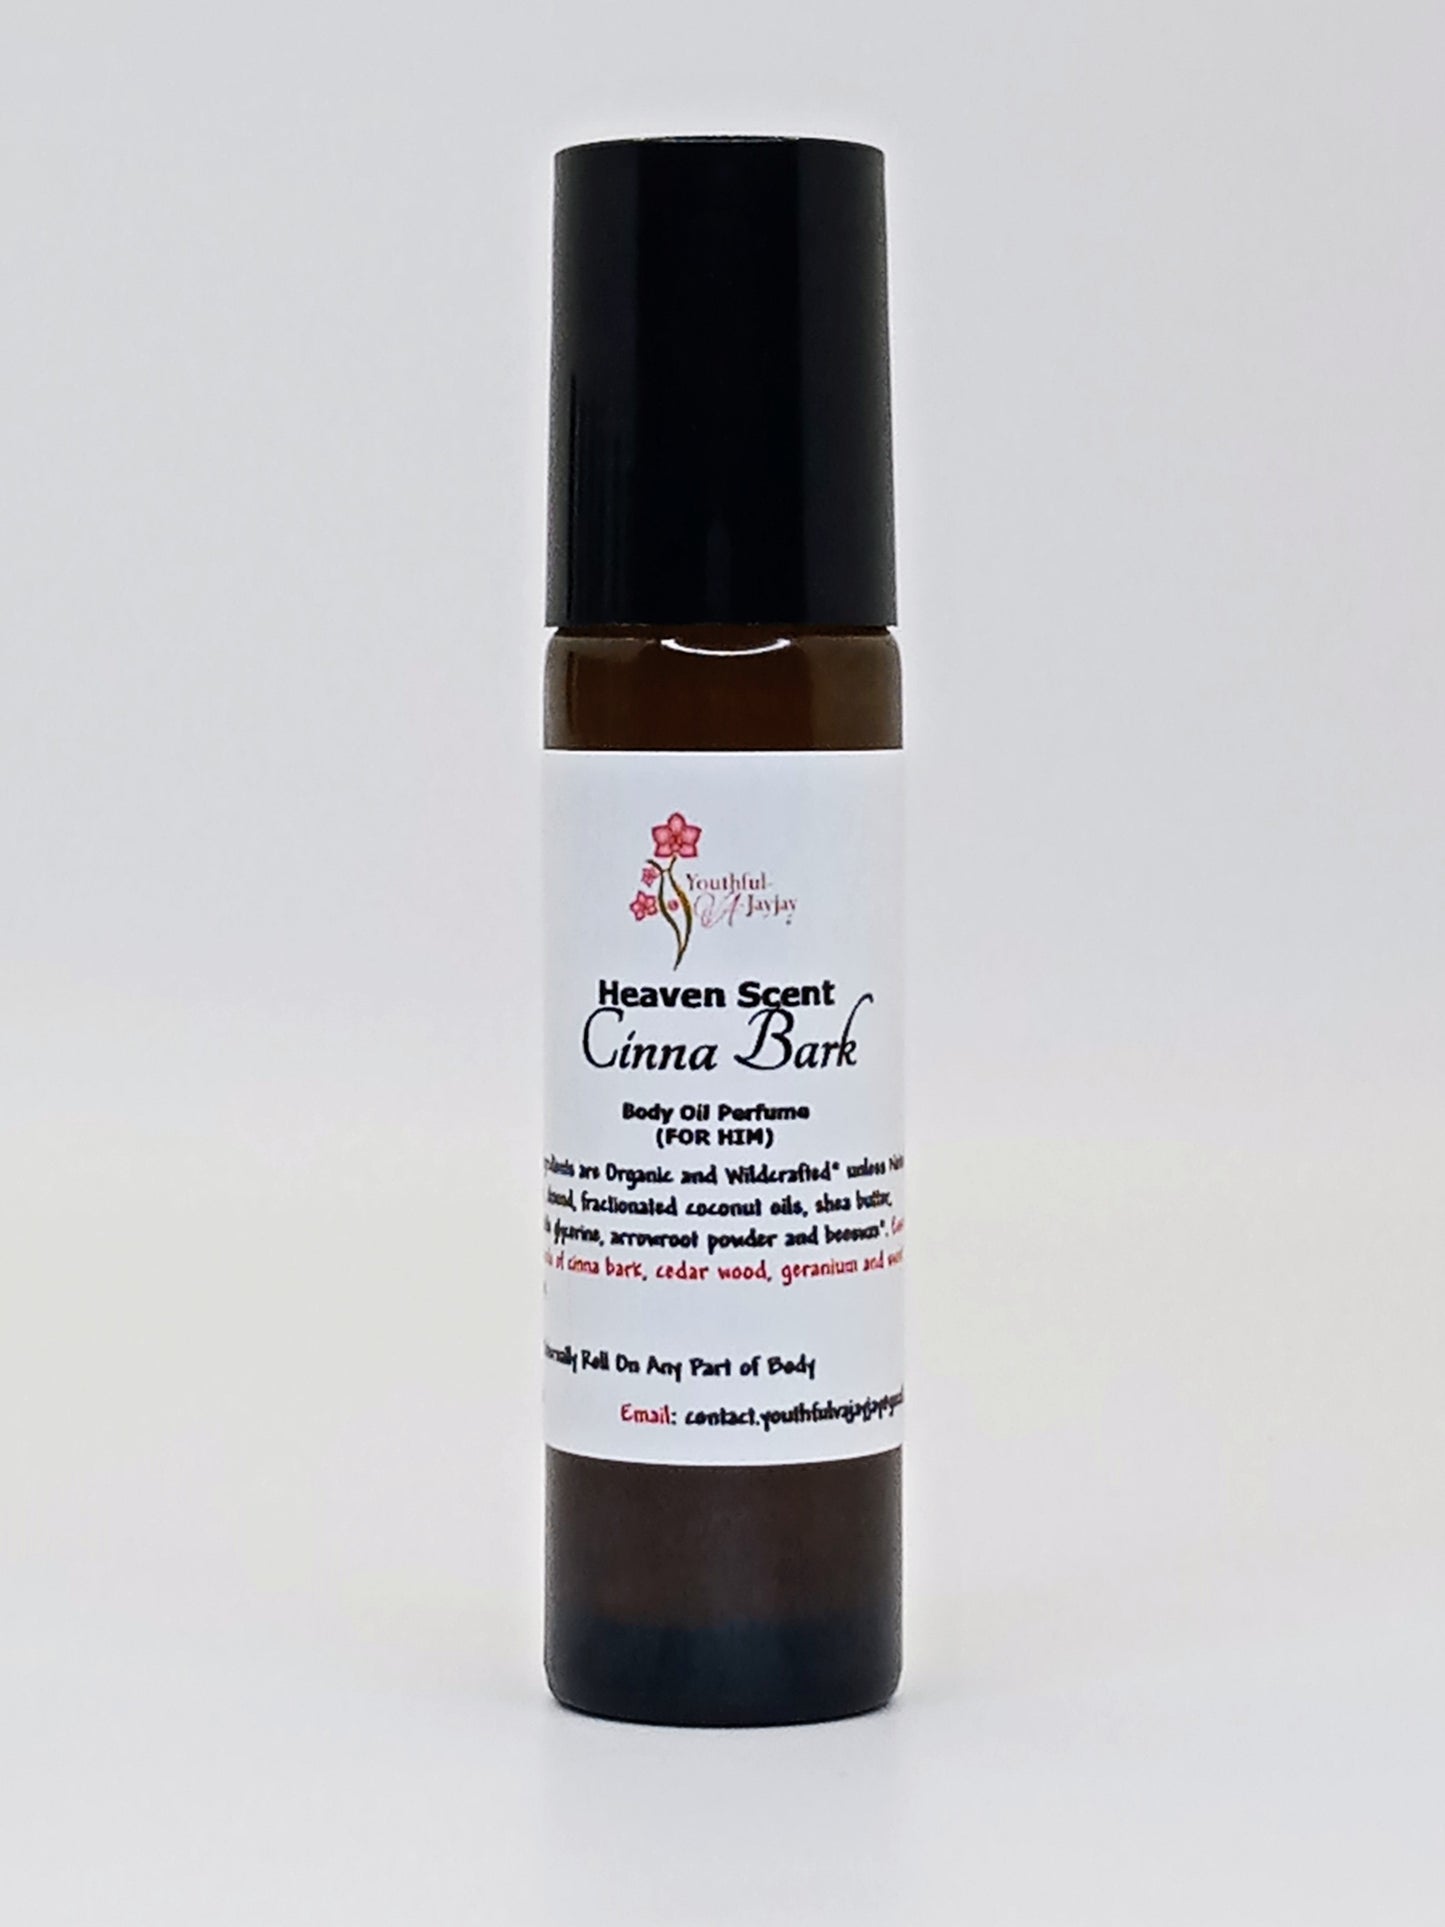 HEAVEN SCENT: Dragon's Bliss Organic Body Oil Perfume, 10ml